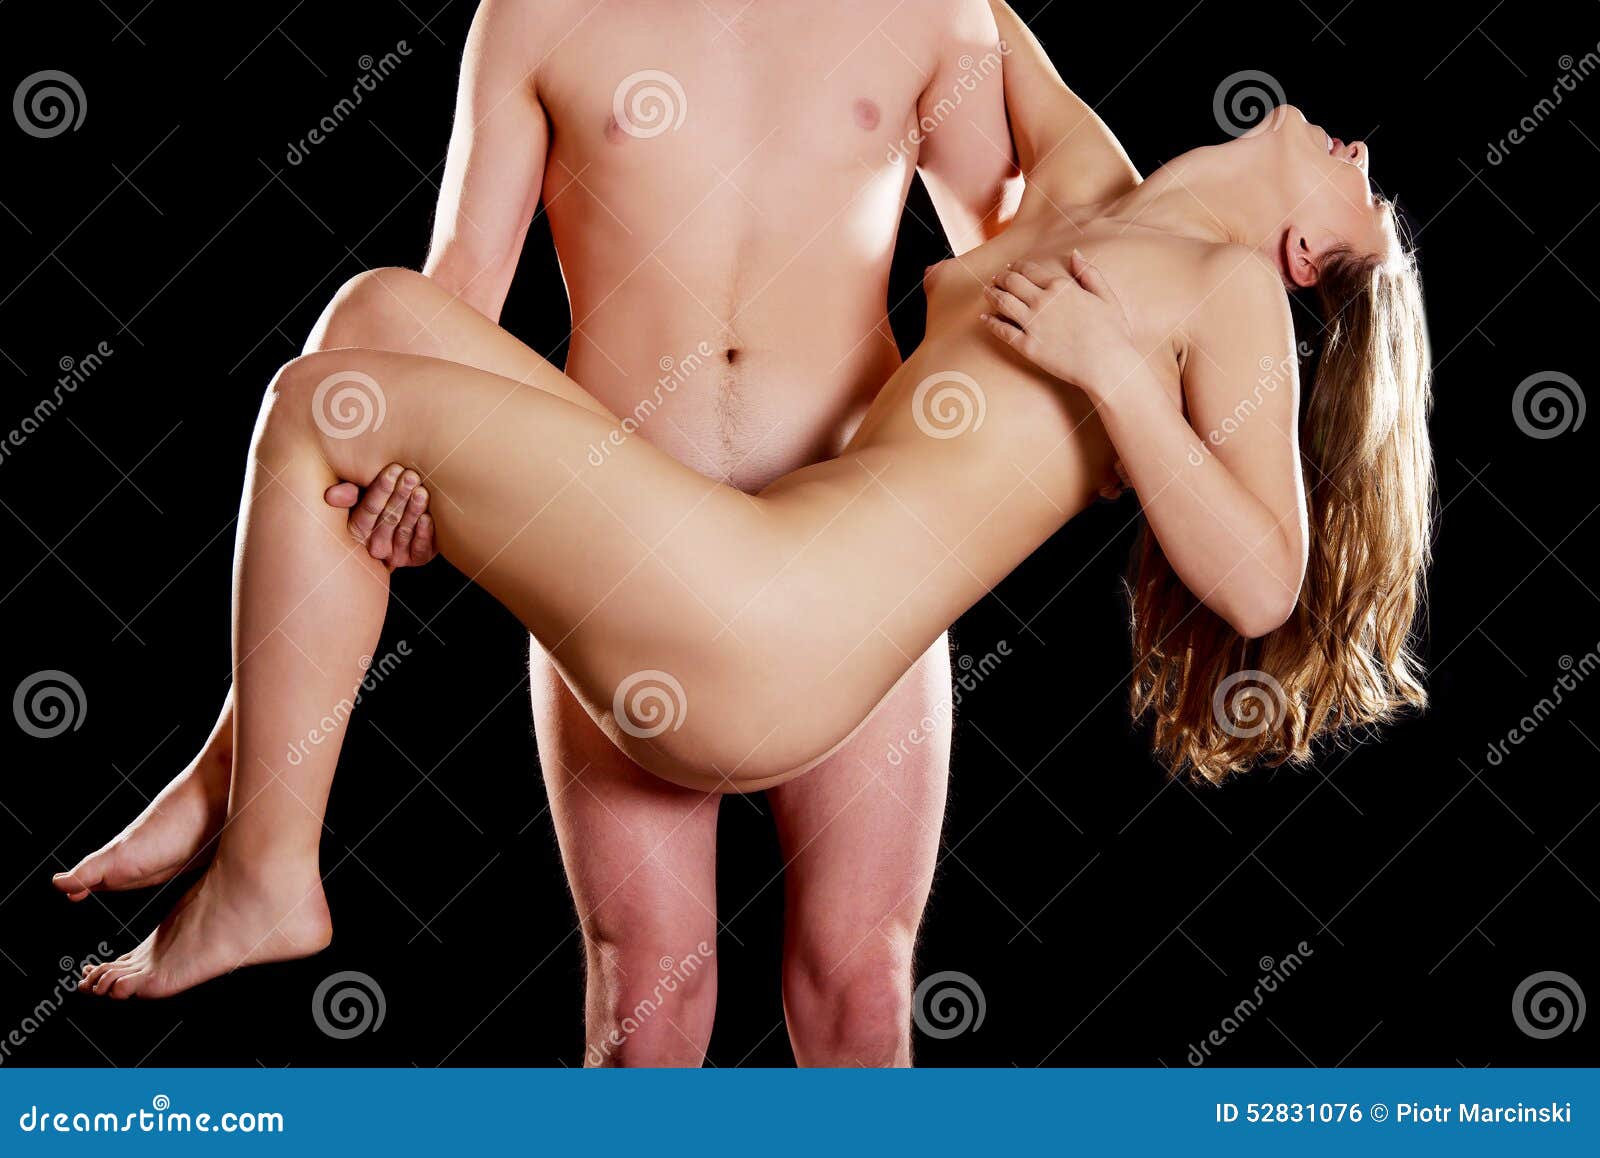 Two Hot Women Naked Mud Wrestling